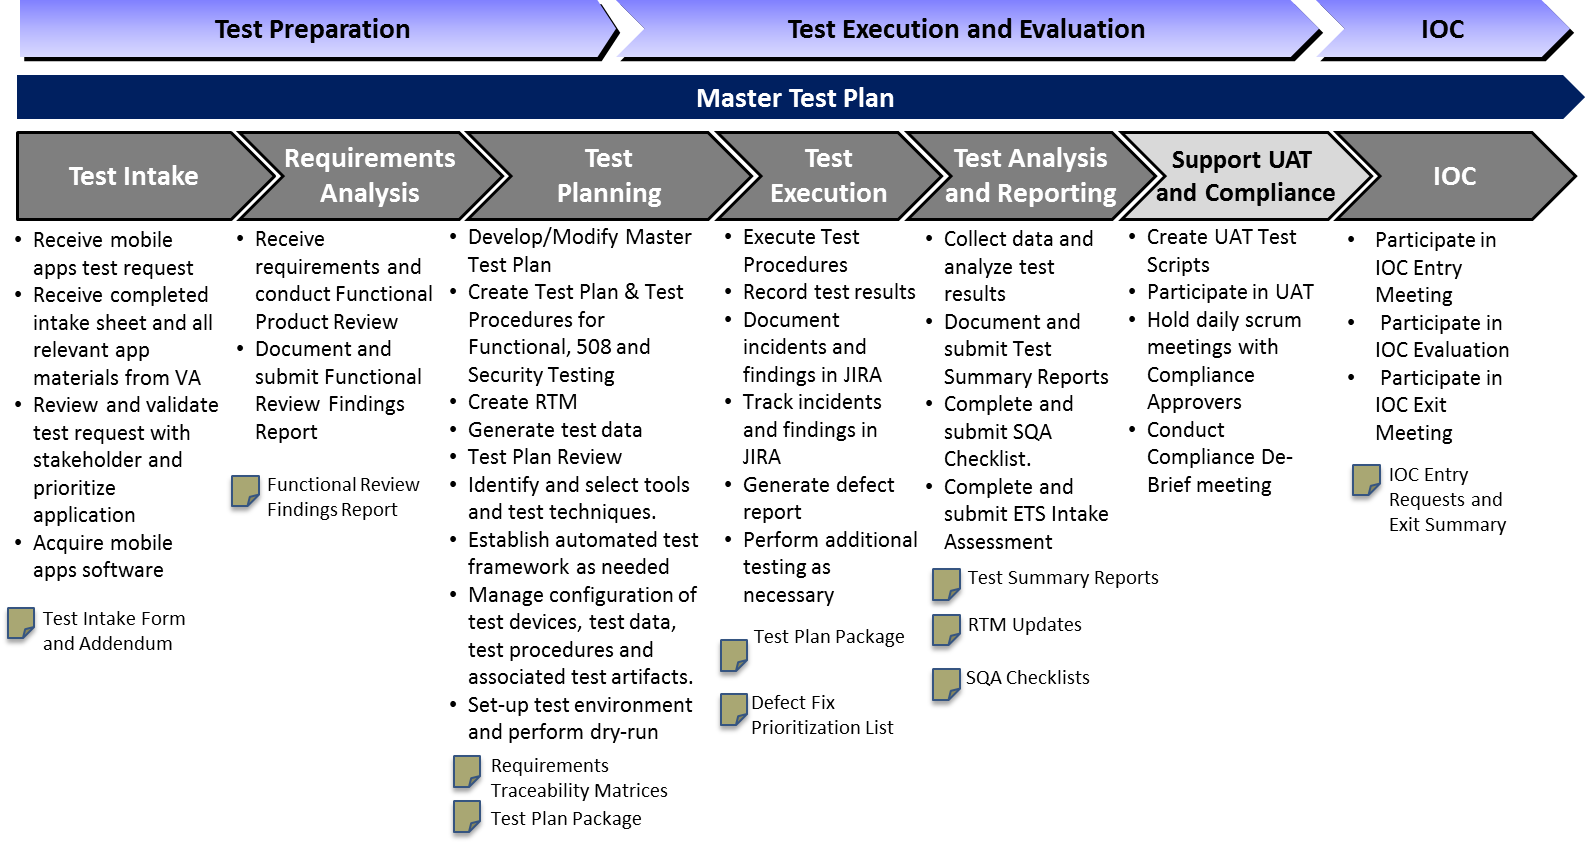 Graphic depicting Master Test Plan